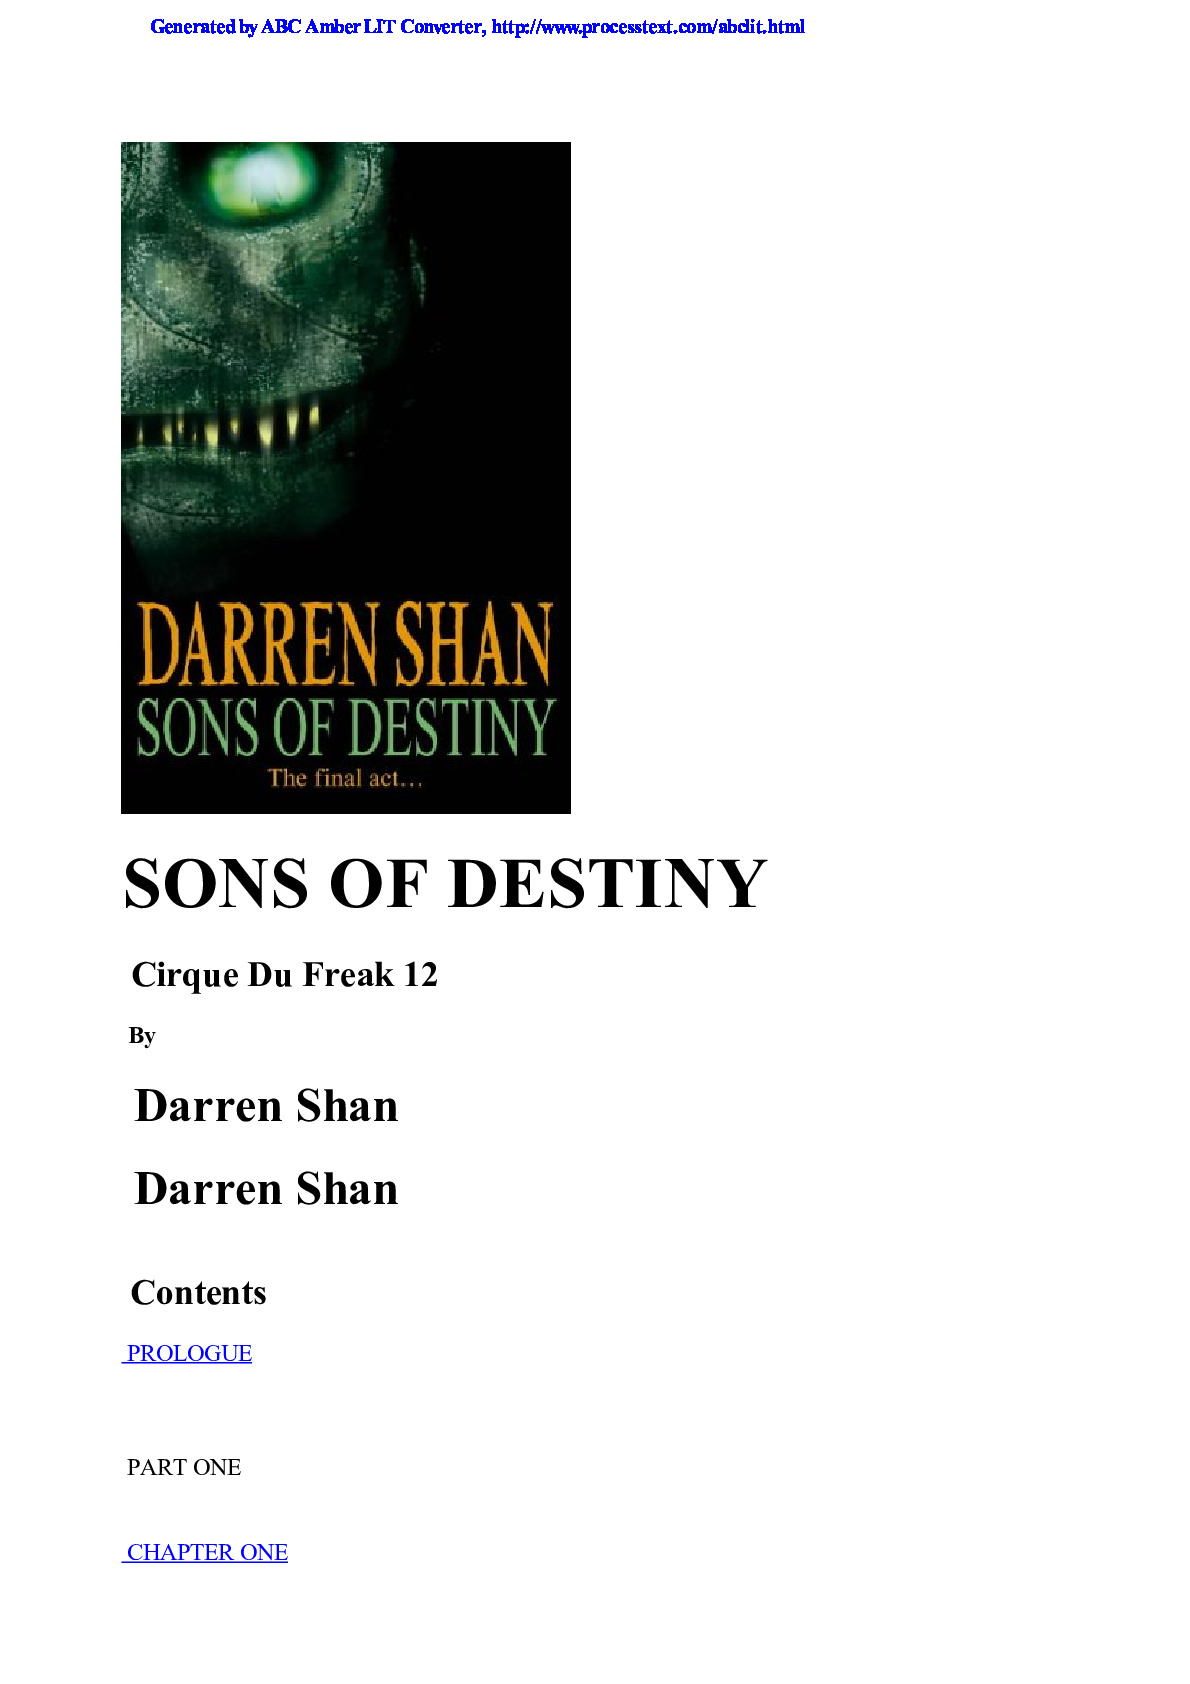 Shan, Darren – Cirque Du Freak 12 – Sons of Destiny